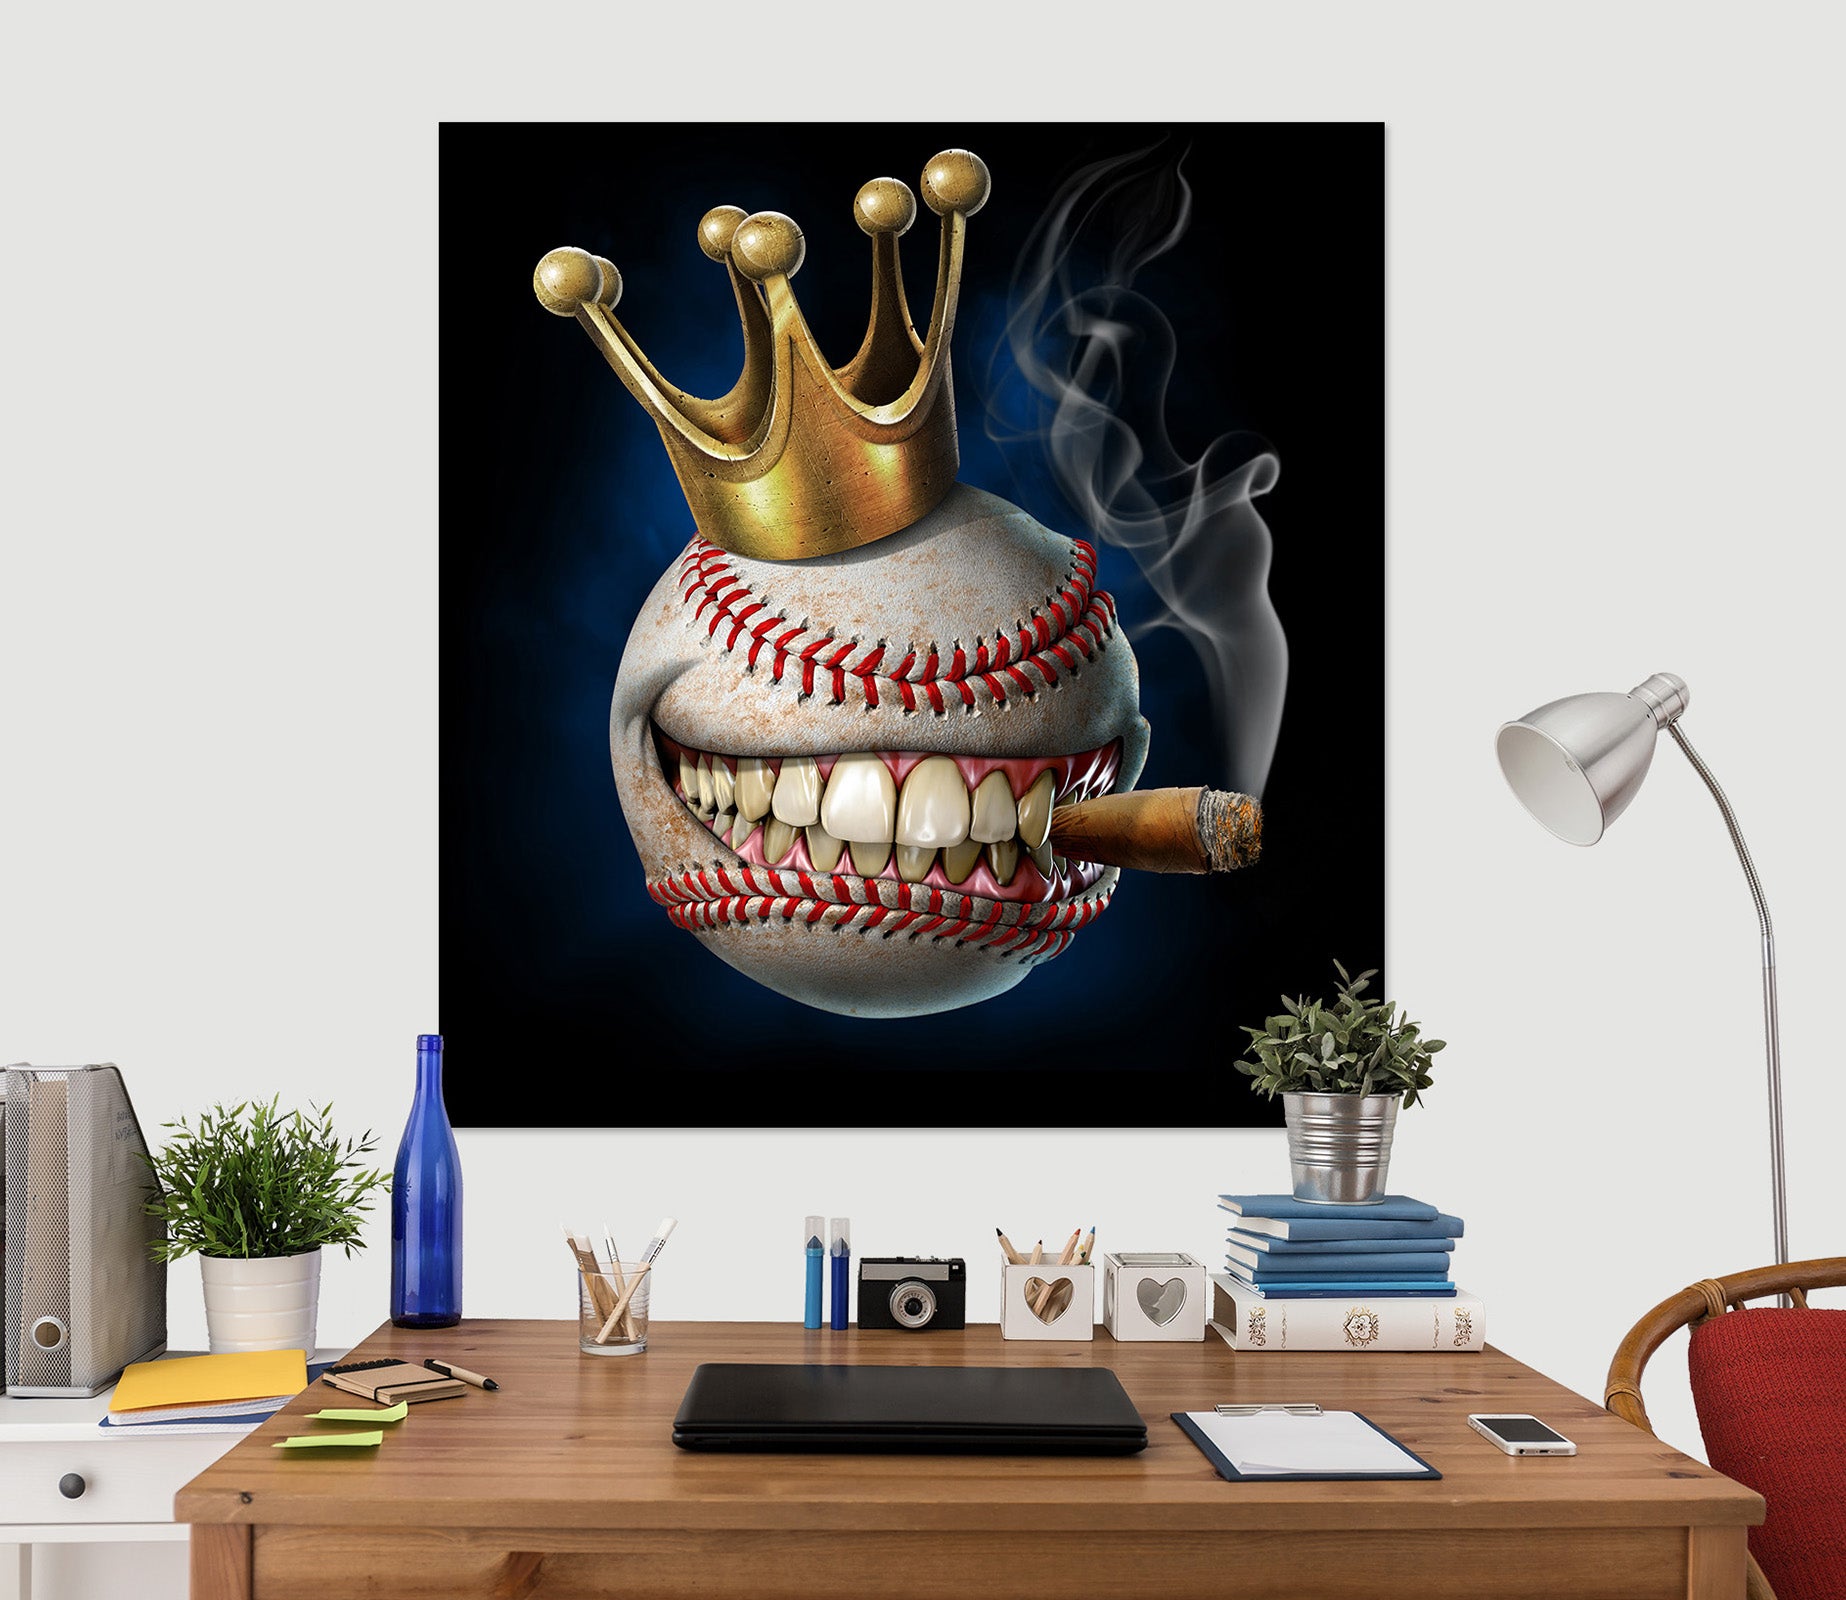 3D Crown Teeth Baseball 5108 Tom Wood Wall Sticker